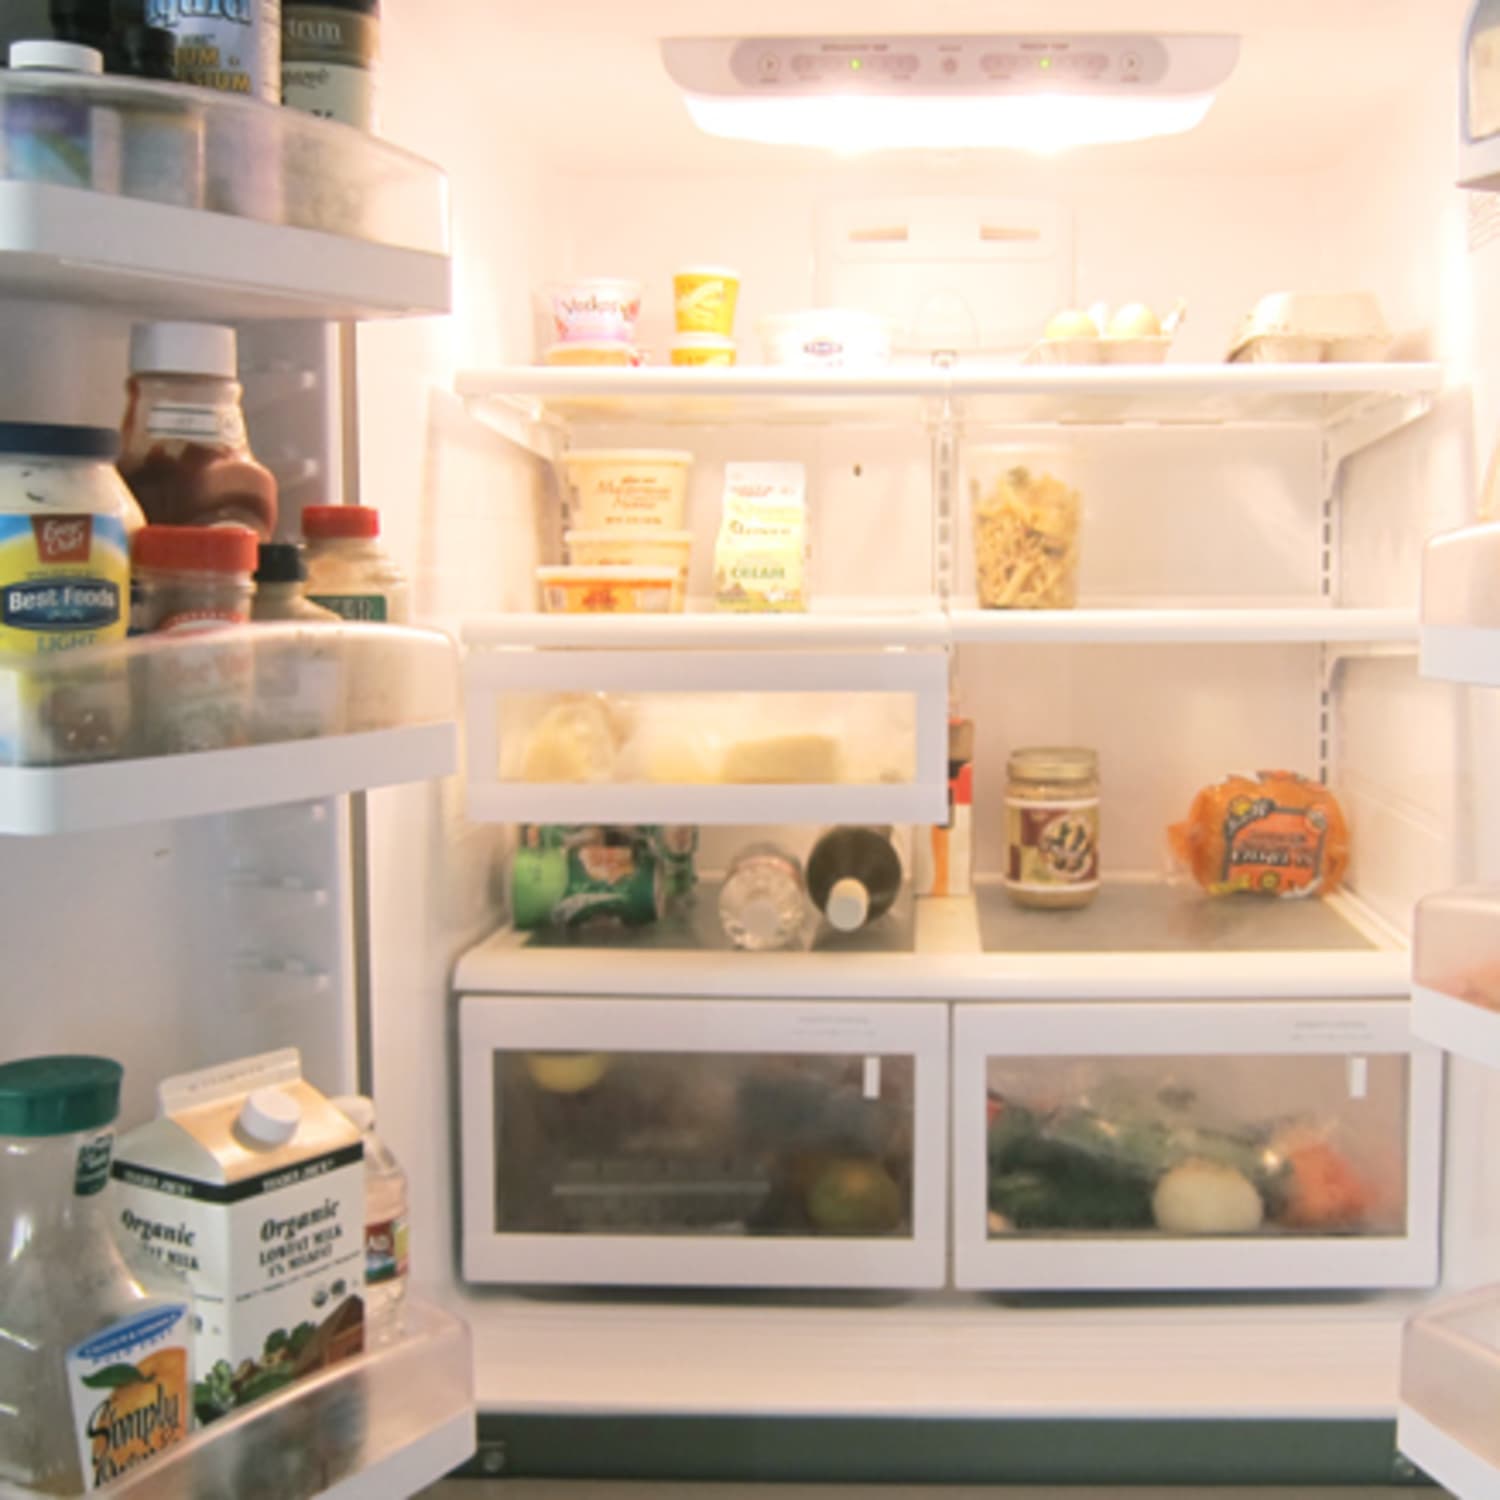 How to Organize the Refrigerator